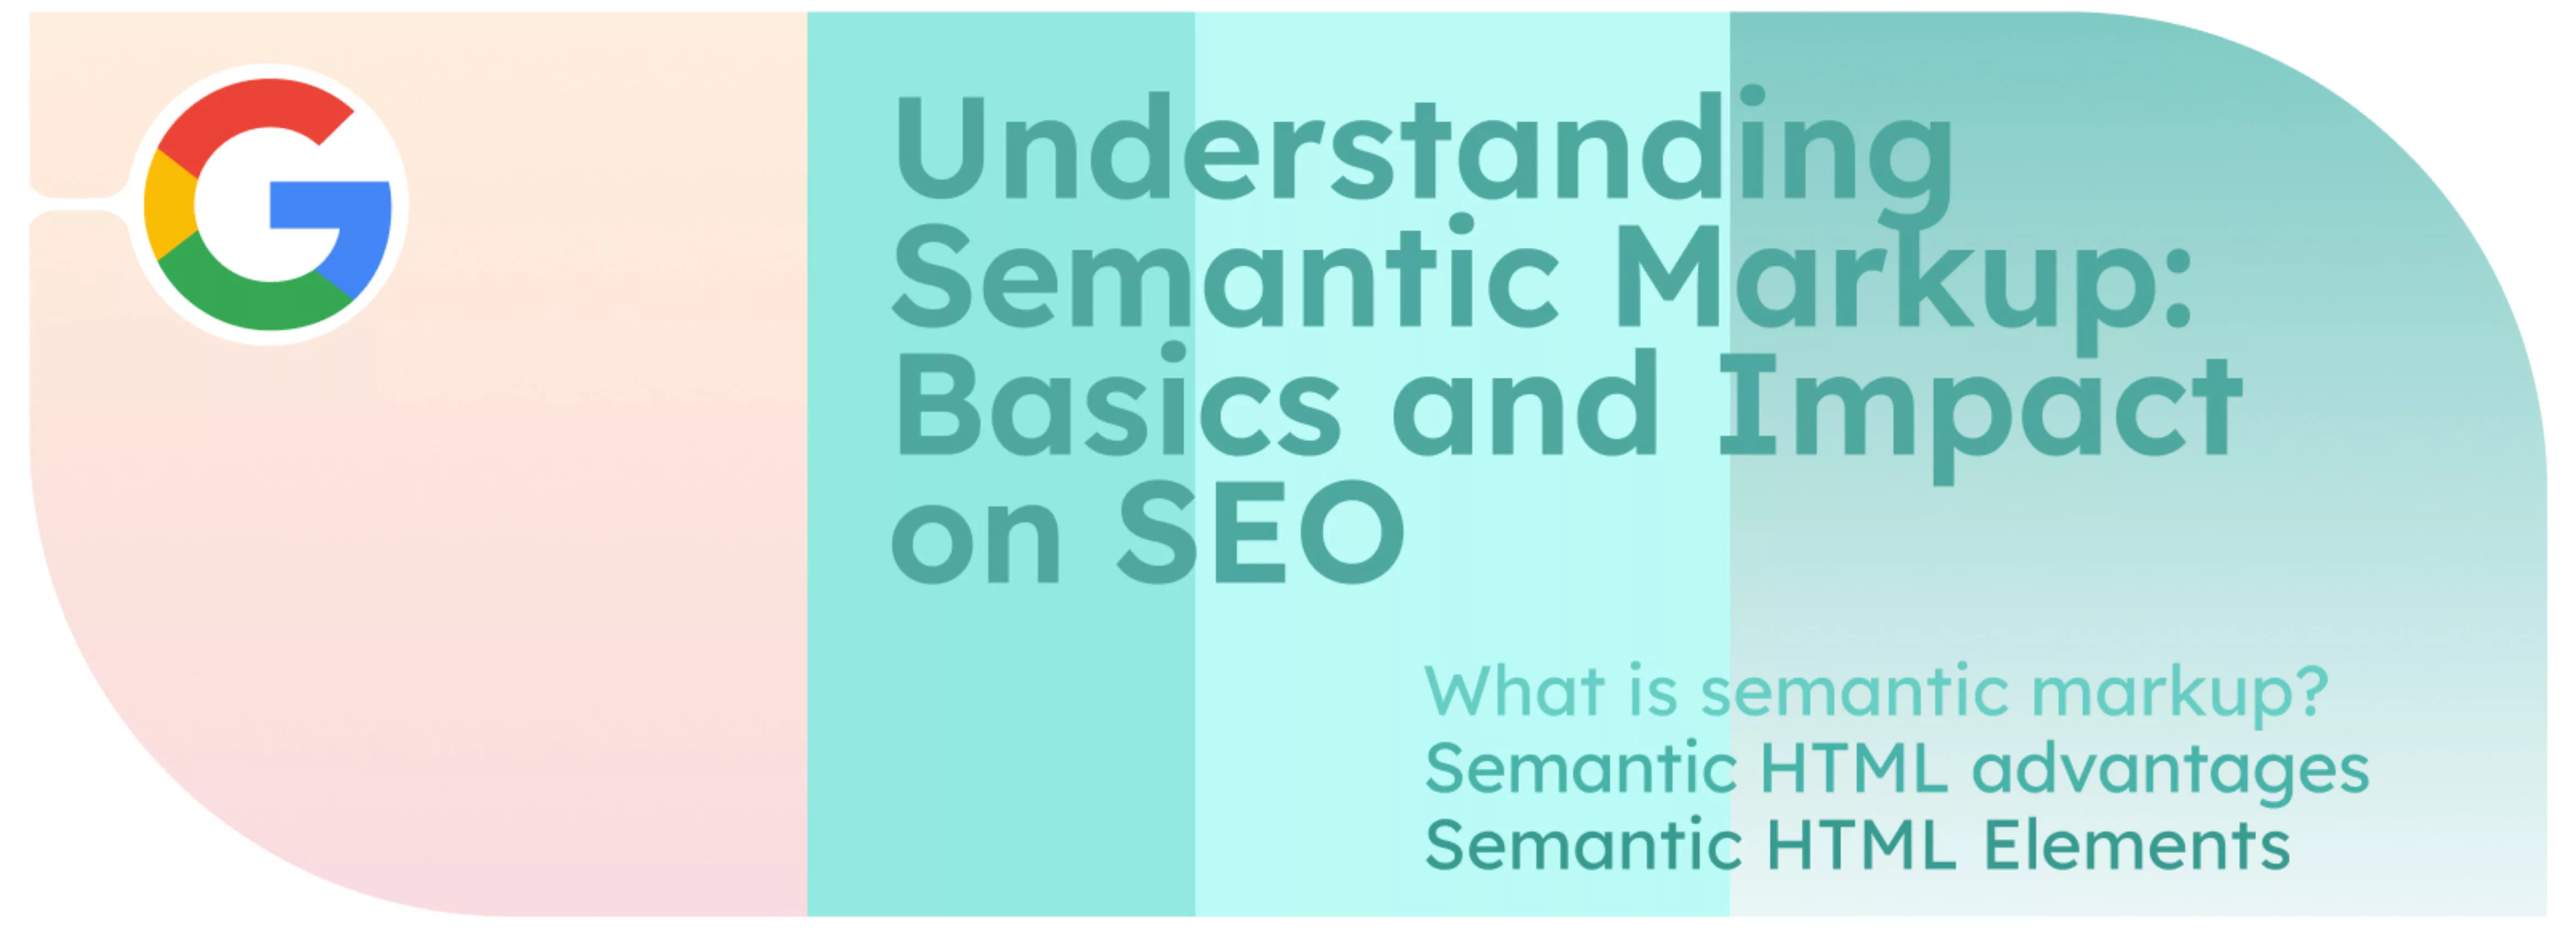 Понимание семантической разметки: Основы и влияние на SEO